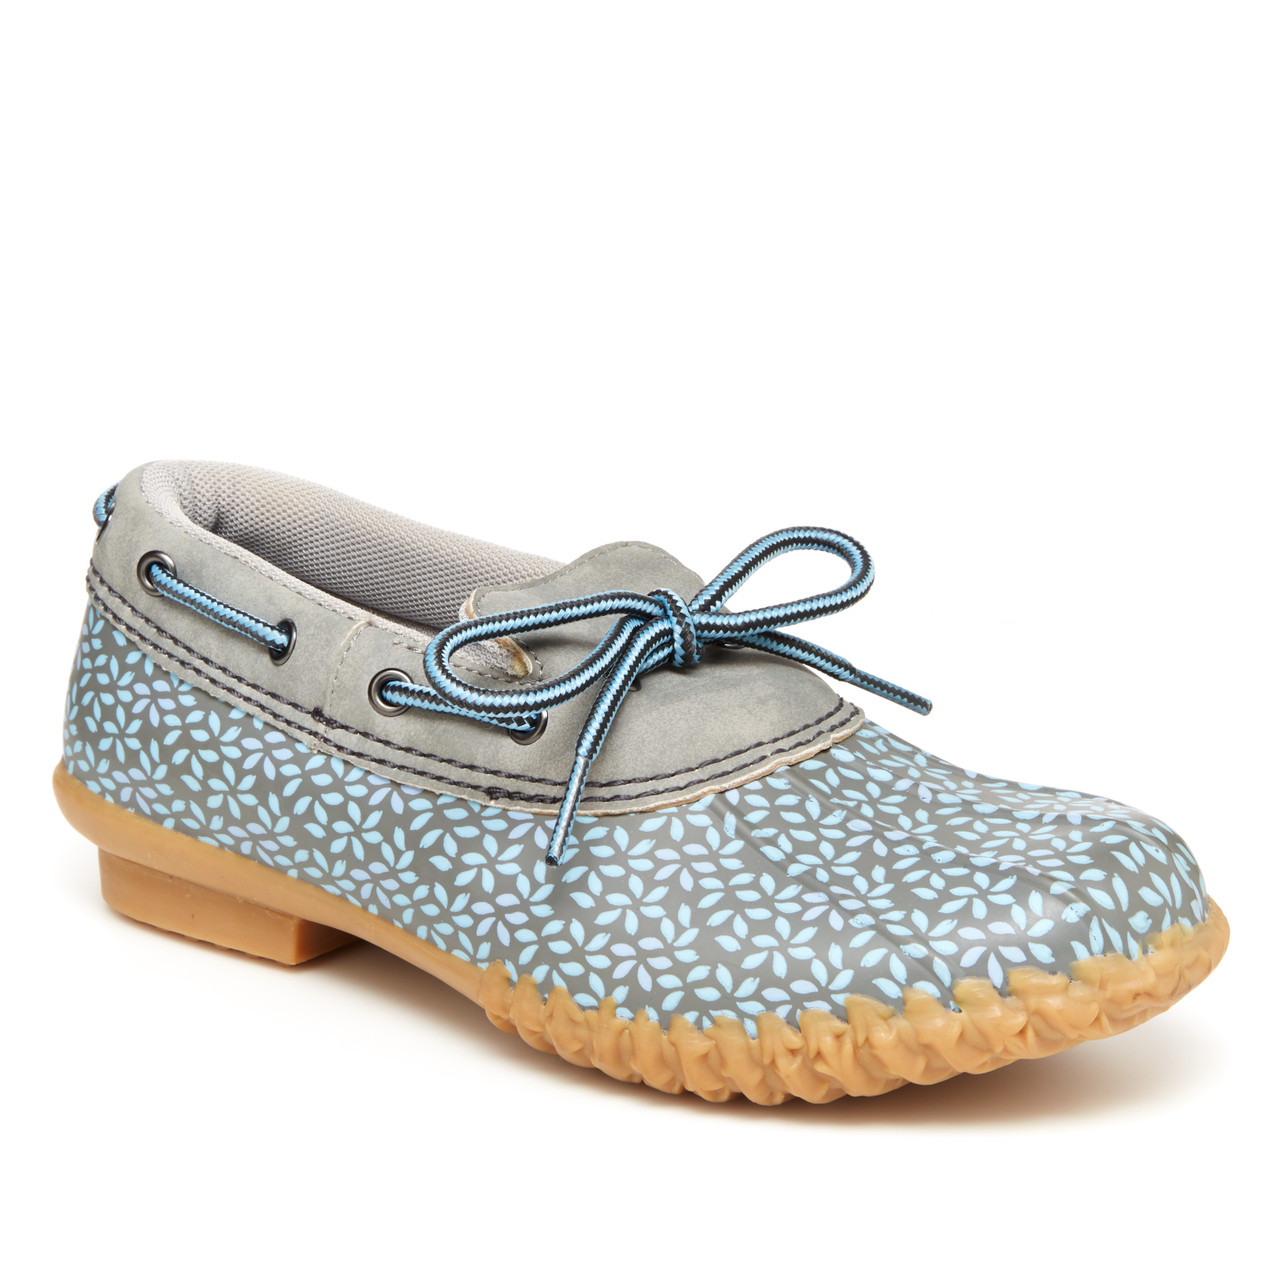 JBU by Jambu Women's Gwen Garden Ready Duck Shoe Stone Blue Floral - Right  Foot Shoes